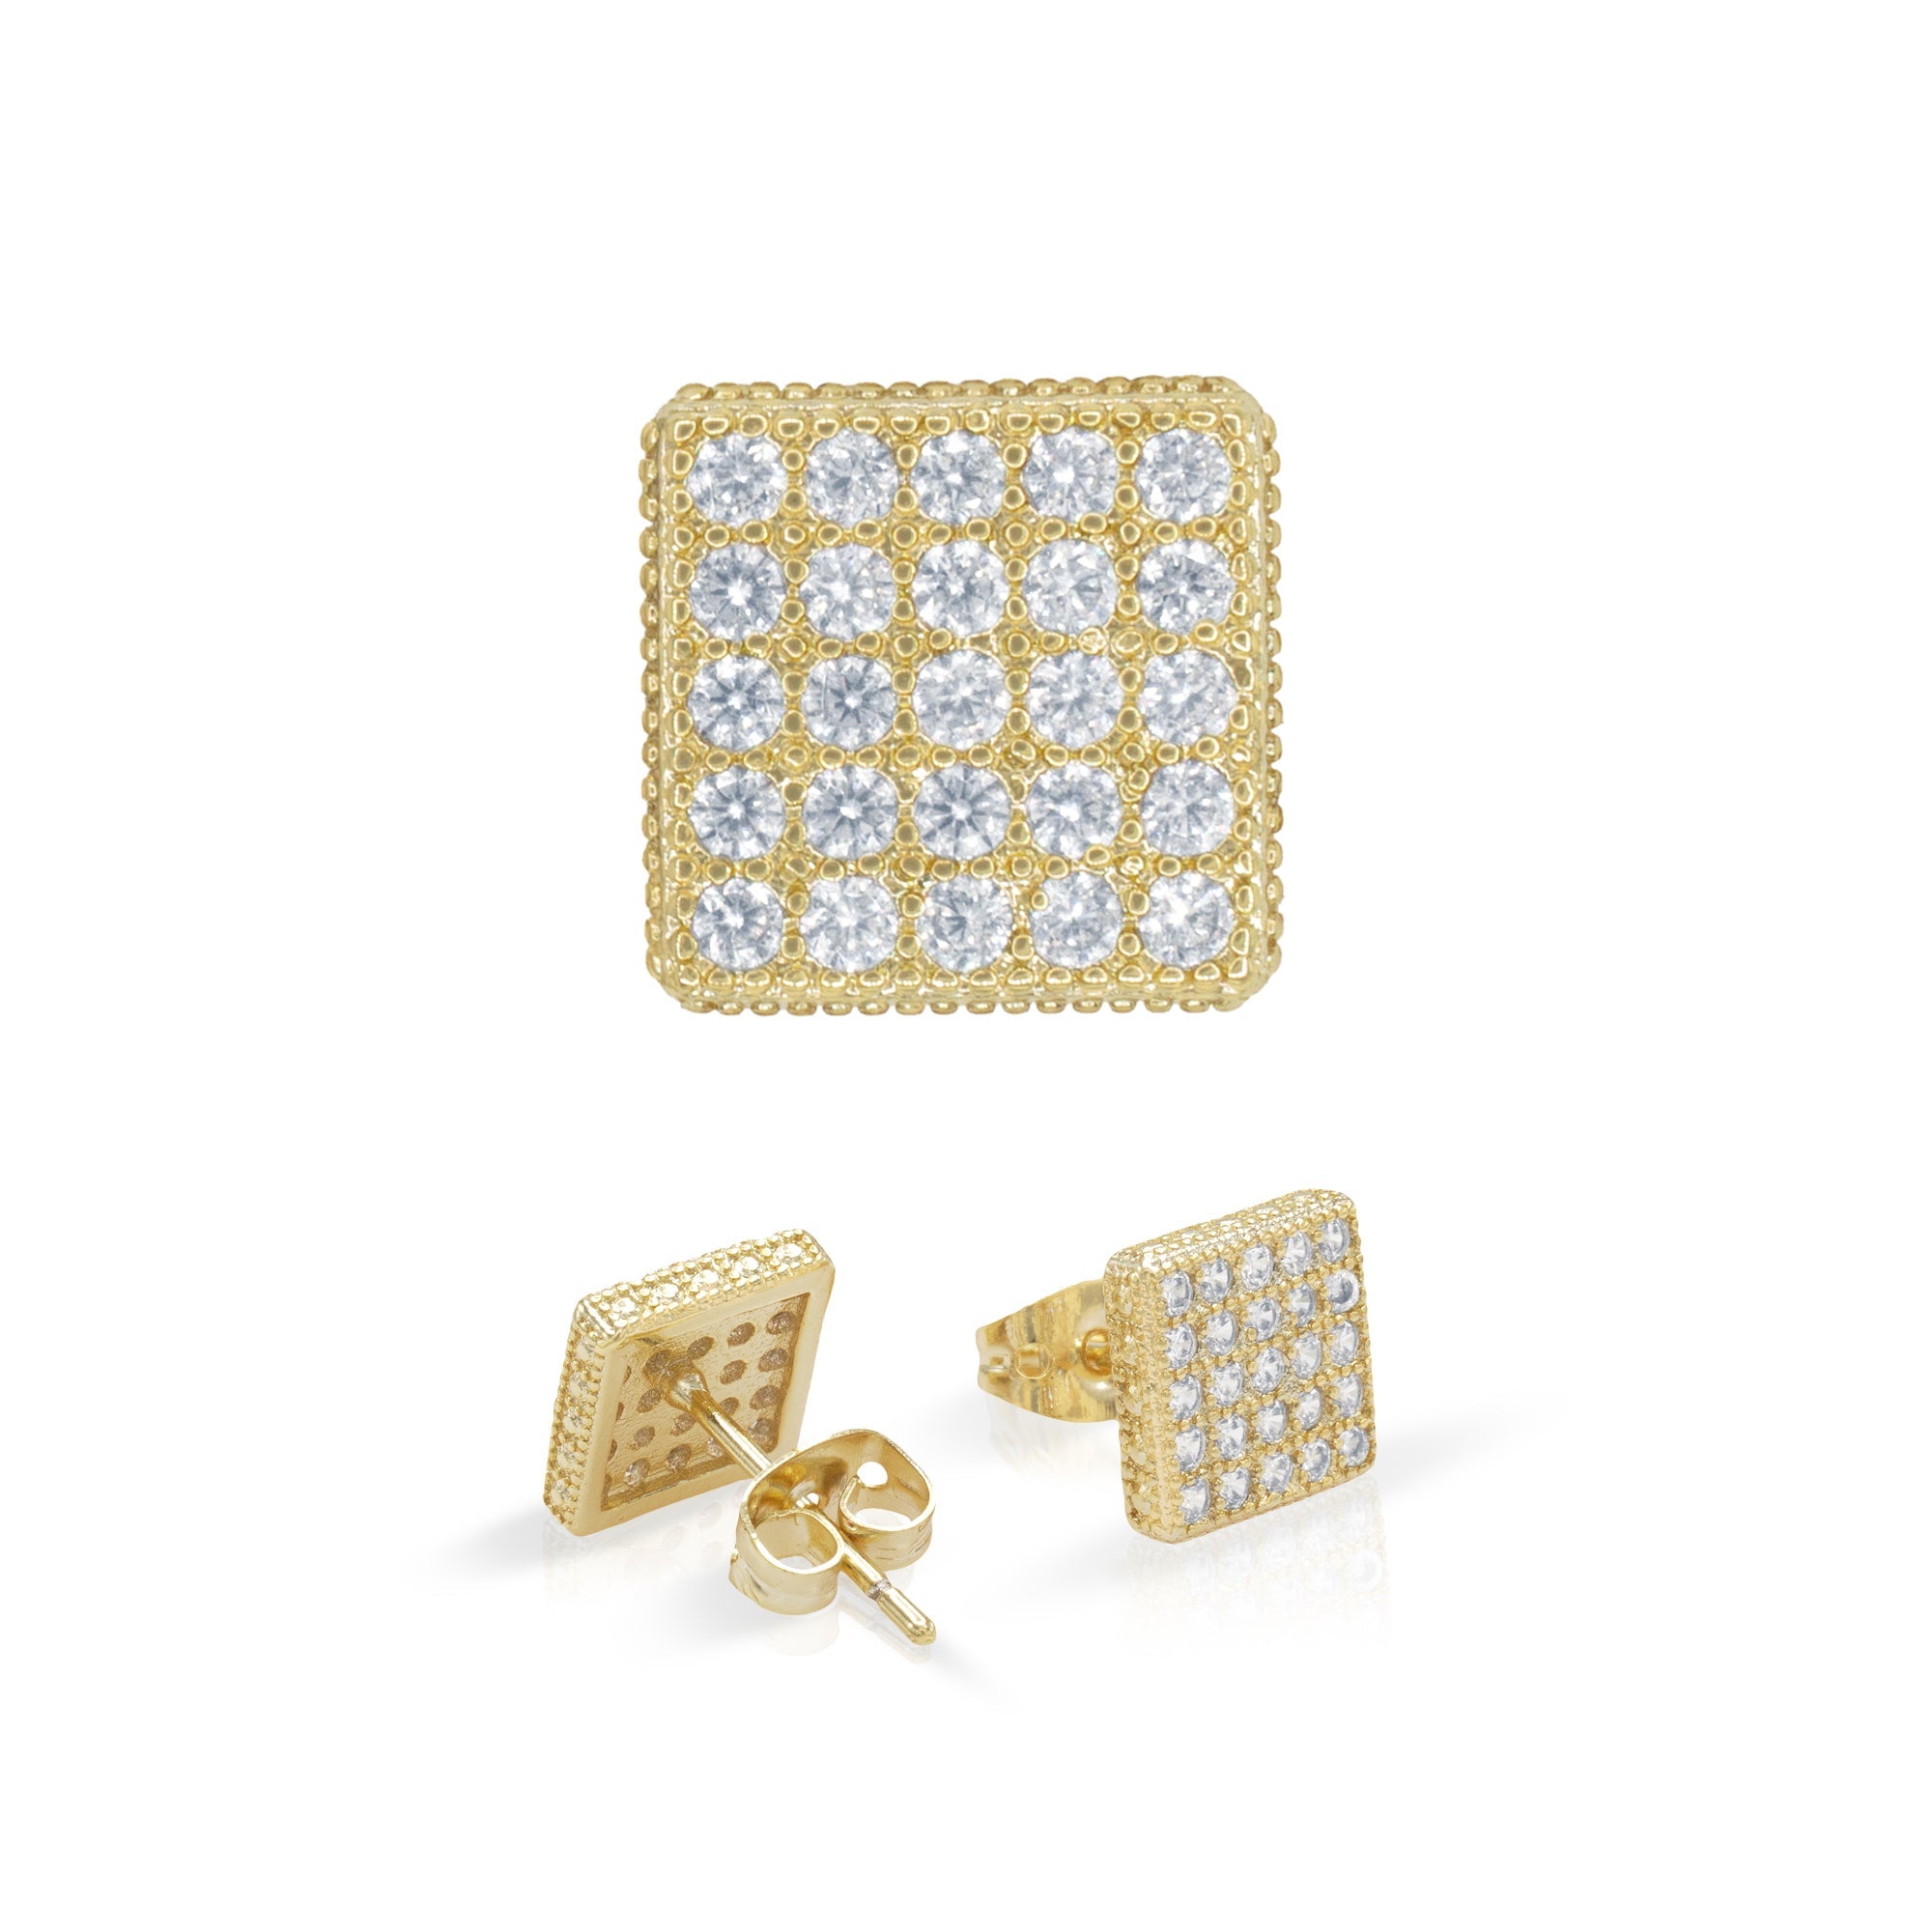 14K gold Filled CZ Square Stud Earrings